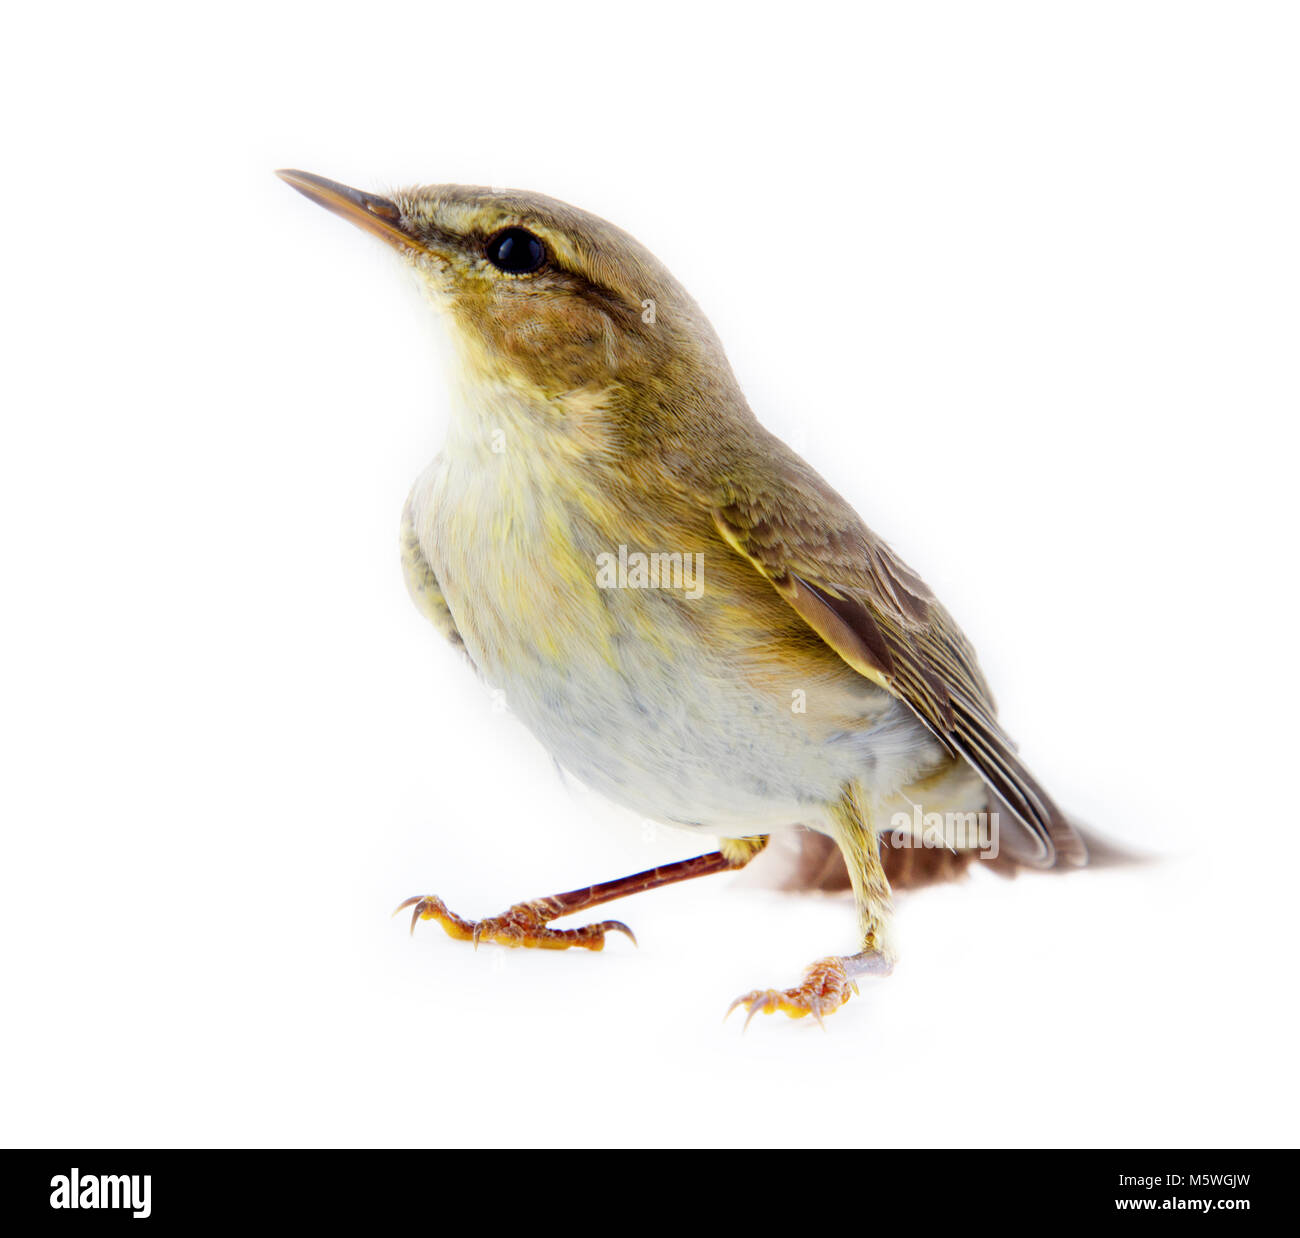 willow warbler (willow wren, Phylloscopus trochilus), yellow-green bird, forest bird, passerine birds - macro, white background Stock Photo